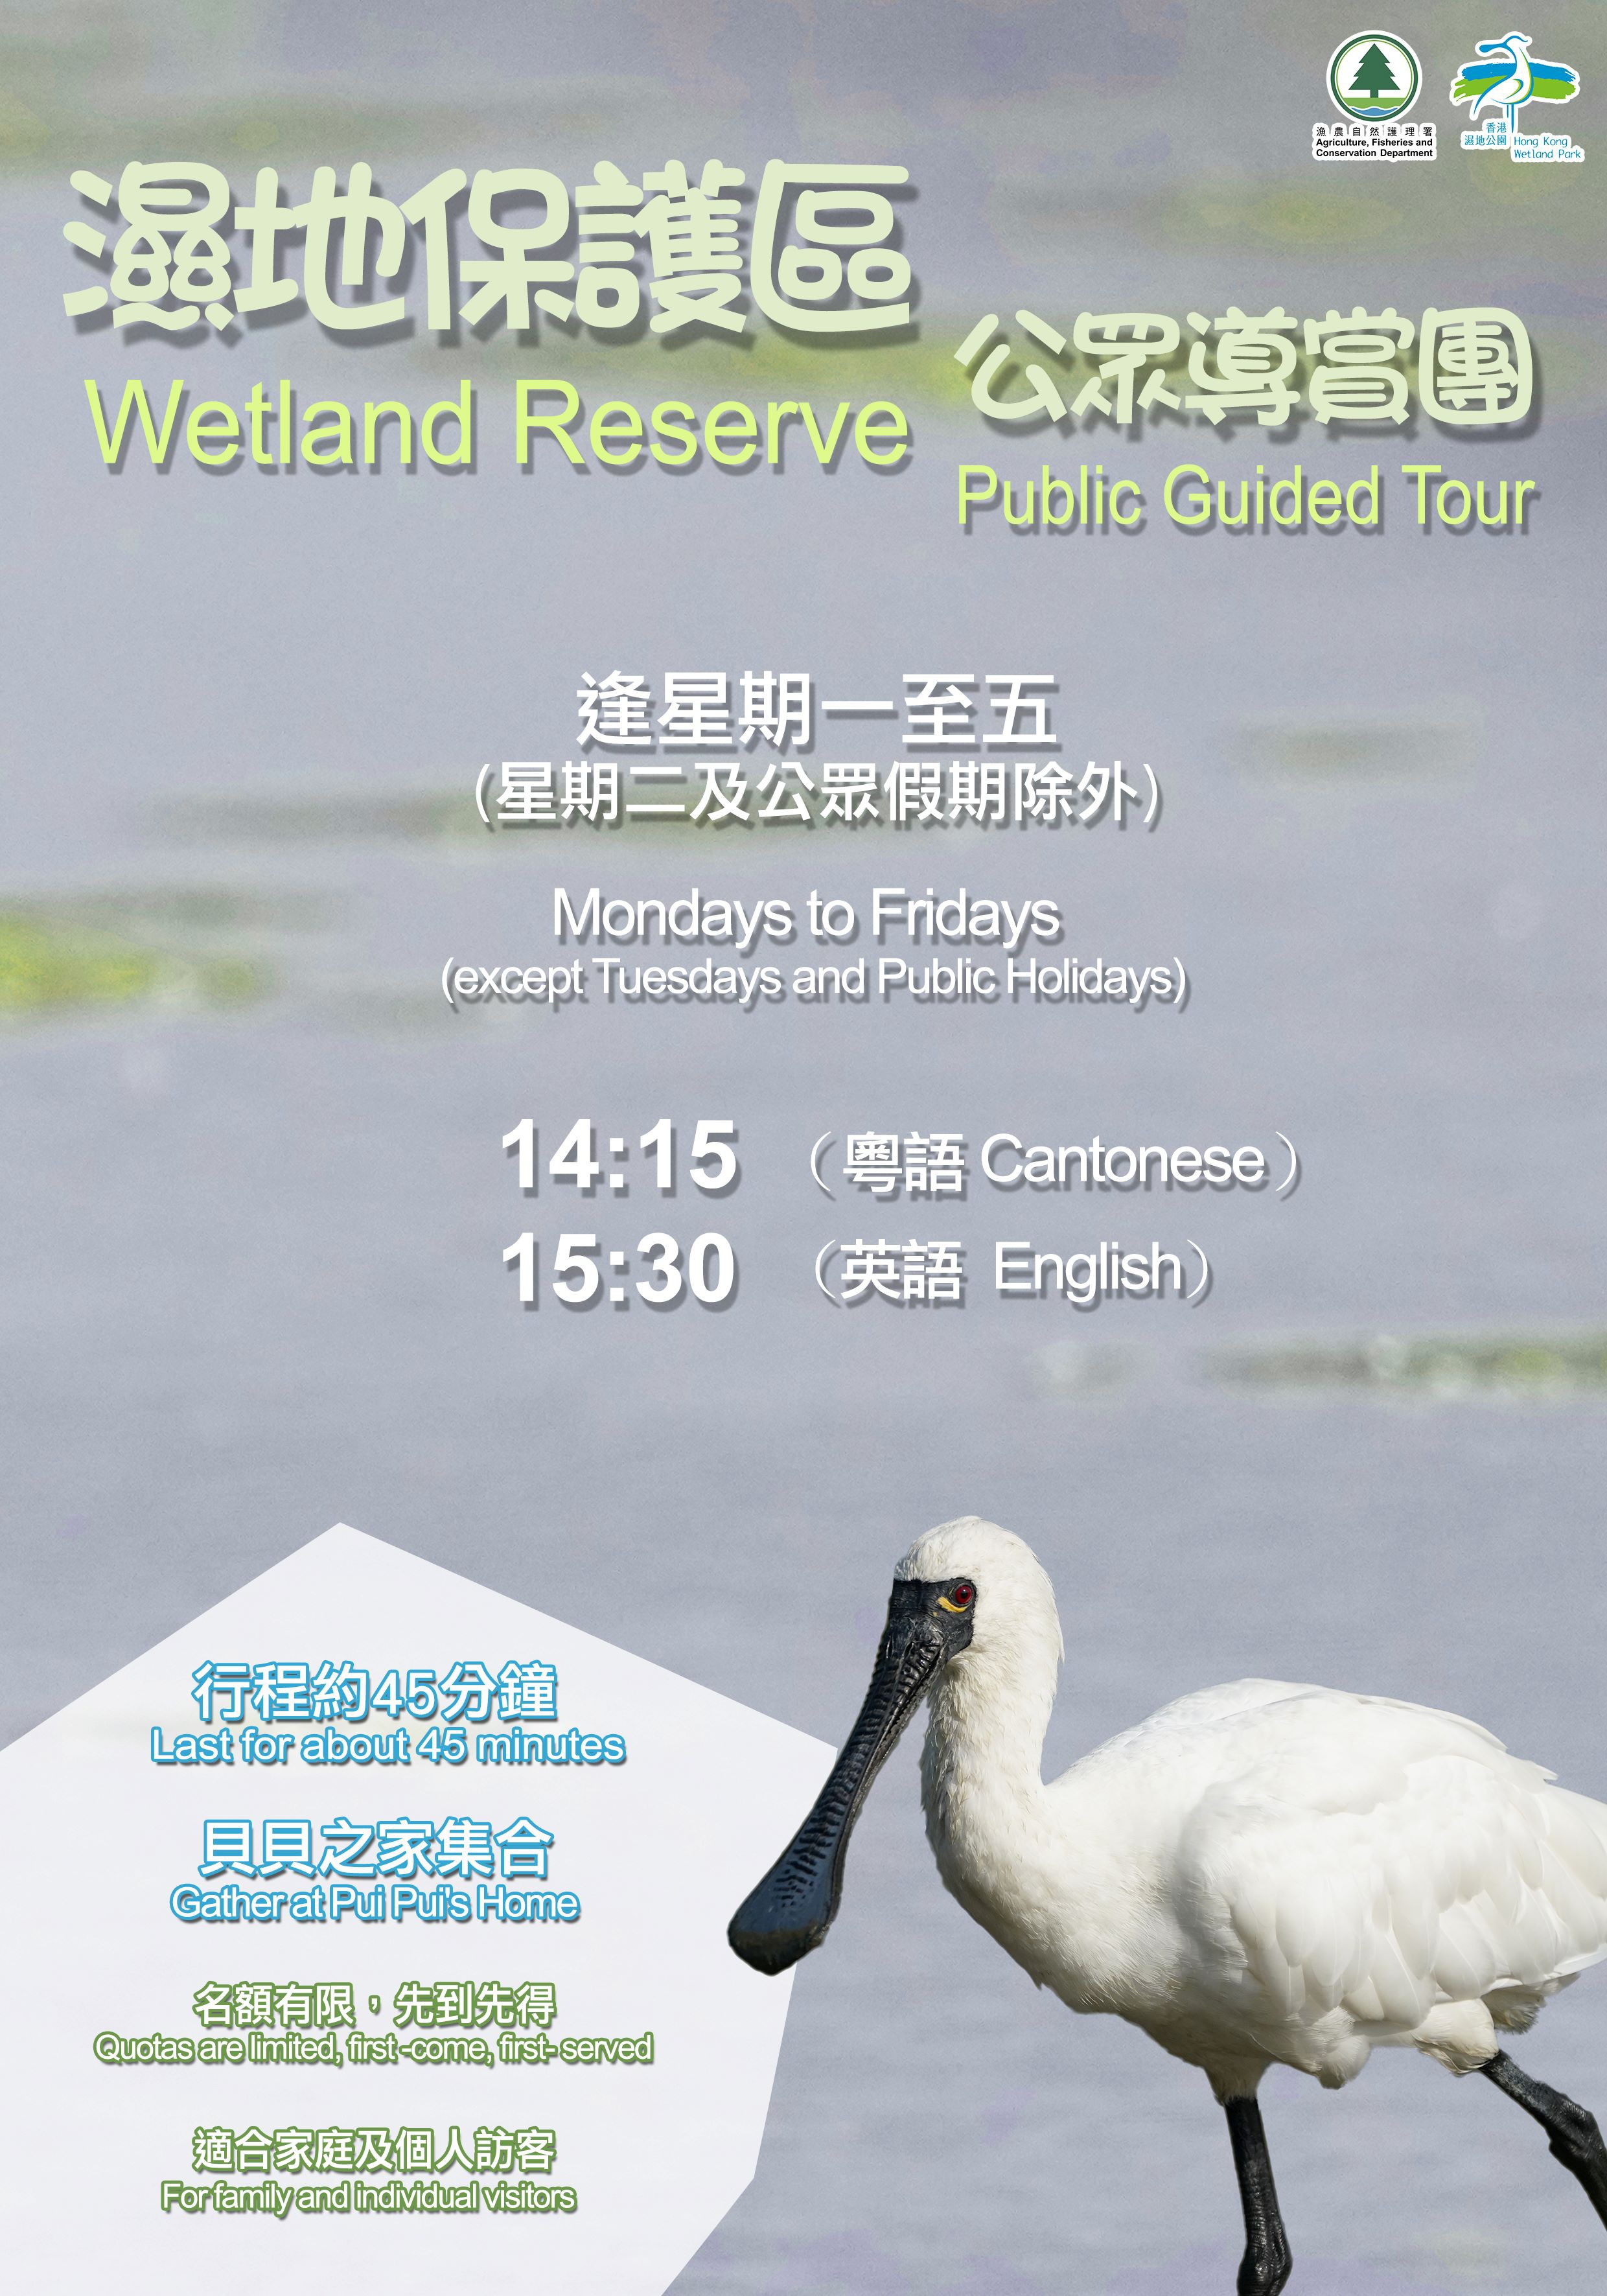 “Wetland Reserve” Public Guided Tour